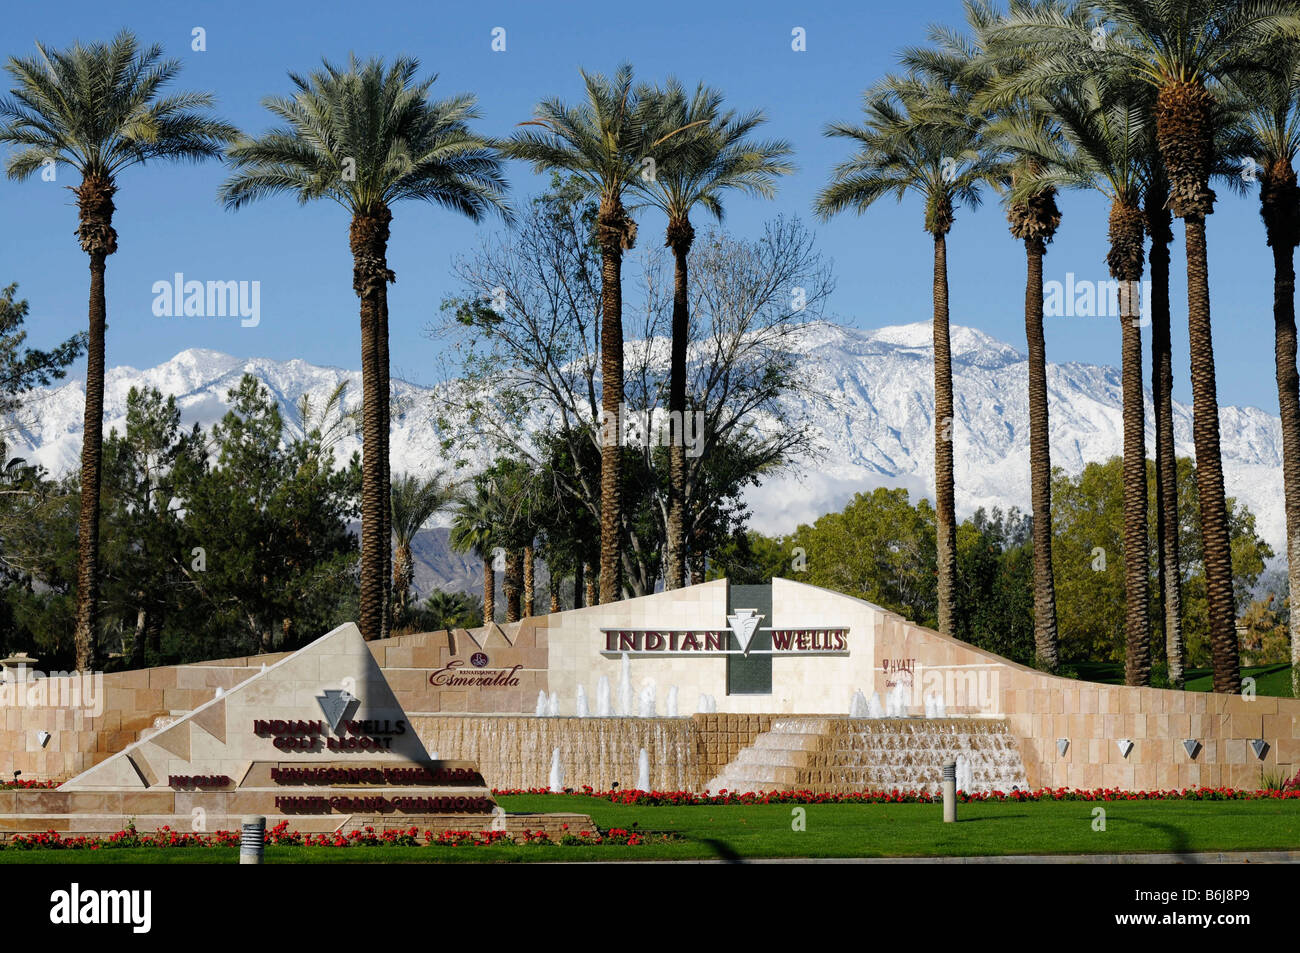 Entrada a Indian Wells golf resort cerca de Palm Springs, California Foto de stock